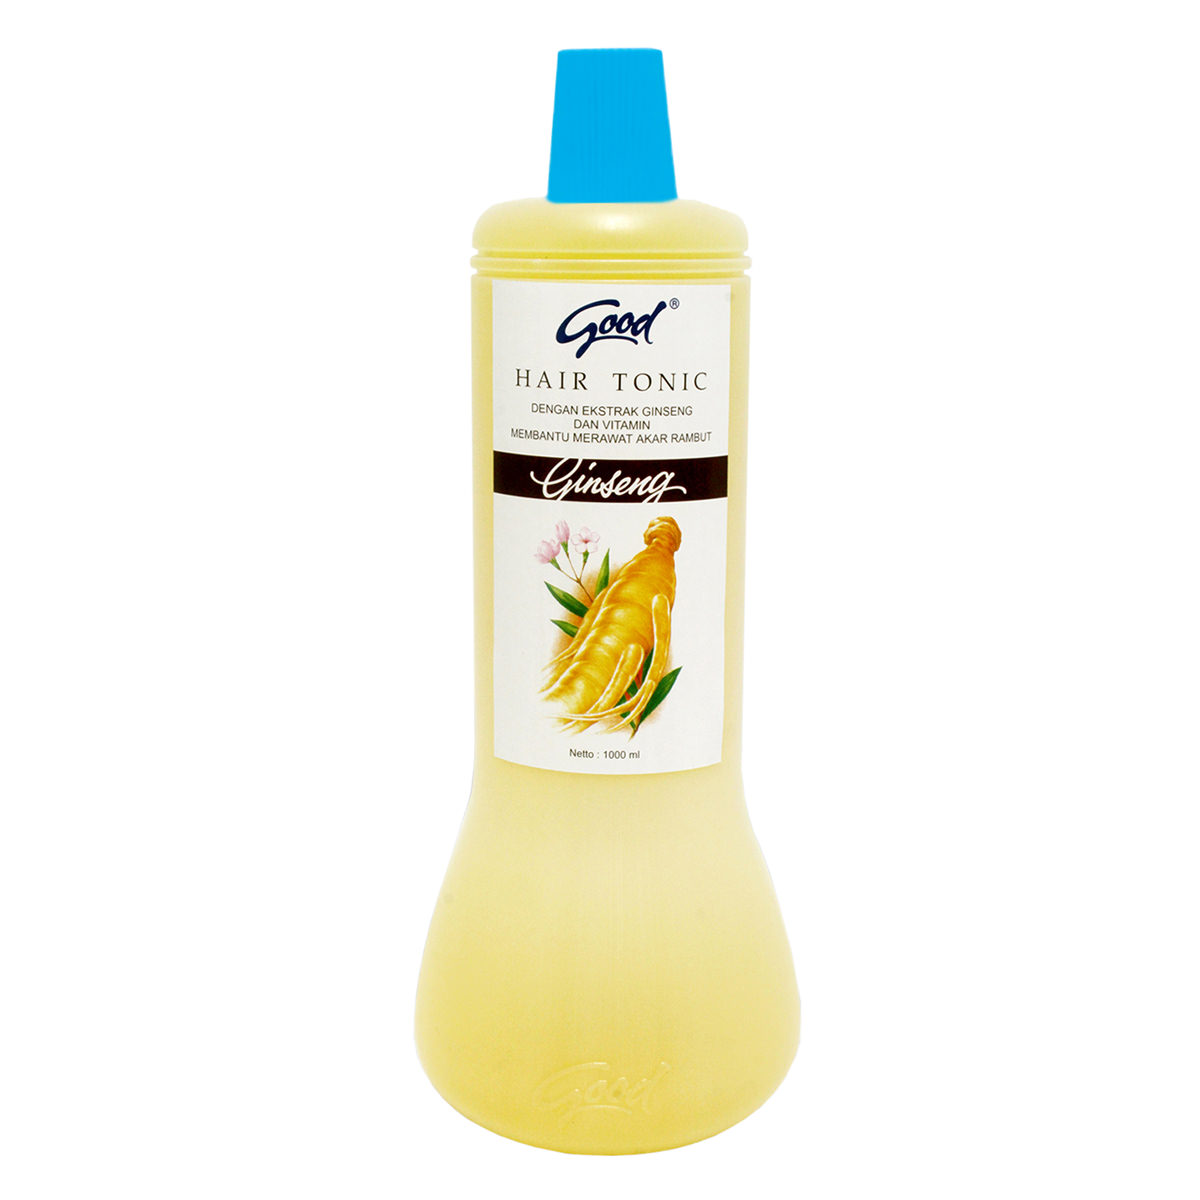 Good-Hair-Tonic-Ginseng-(1000-ml)-sfw(1)